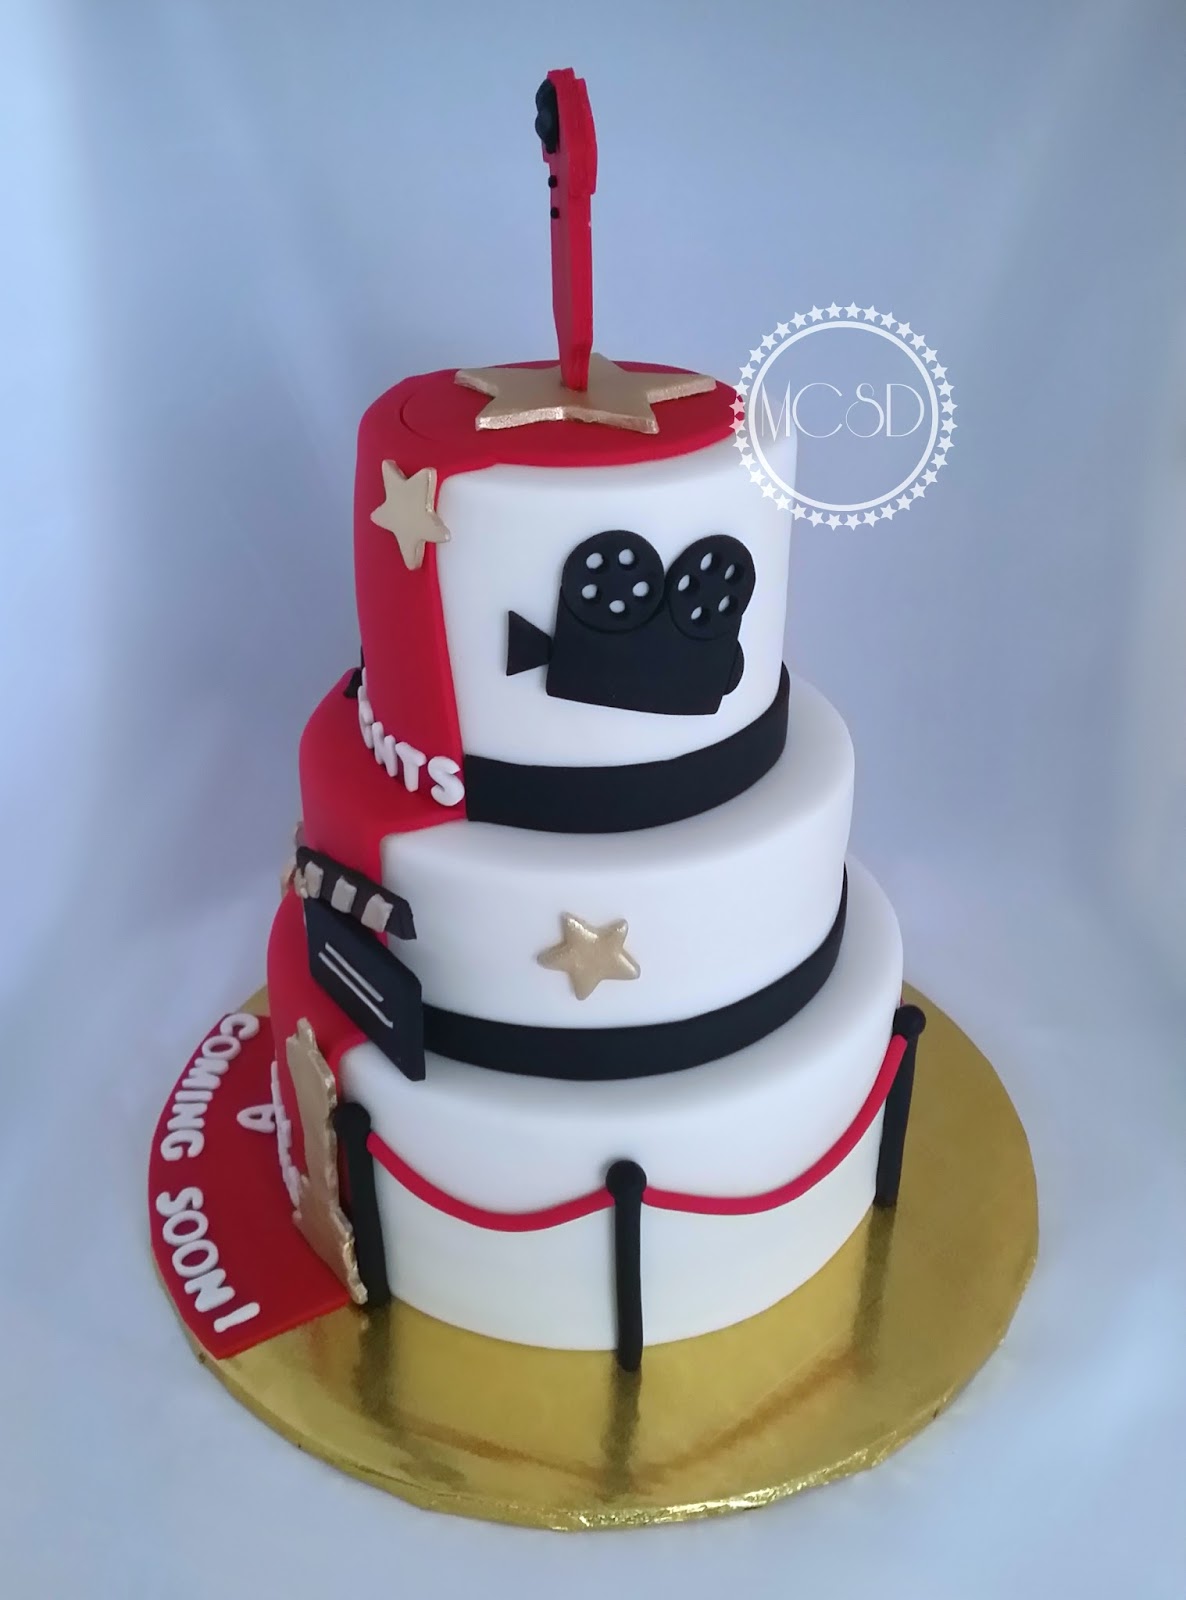 CakesbyZana: Red Carpet Baby Shower Cake